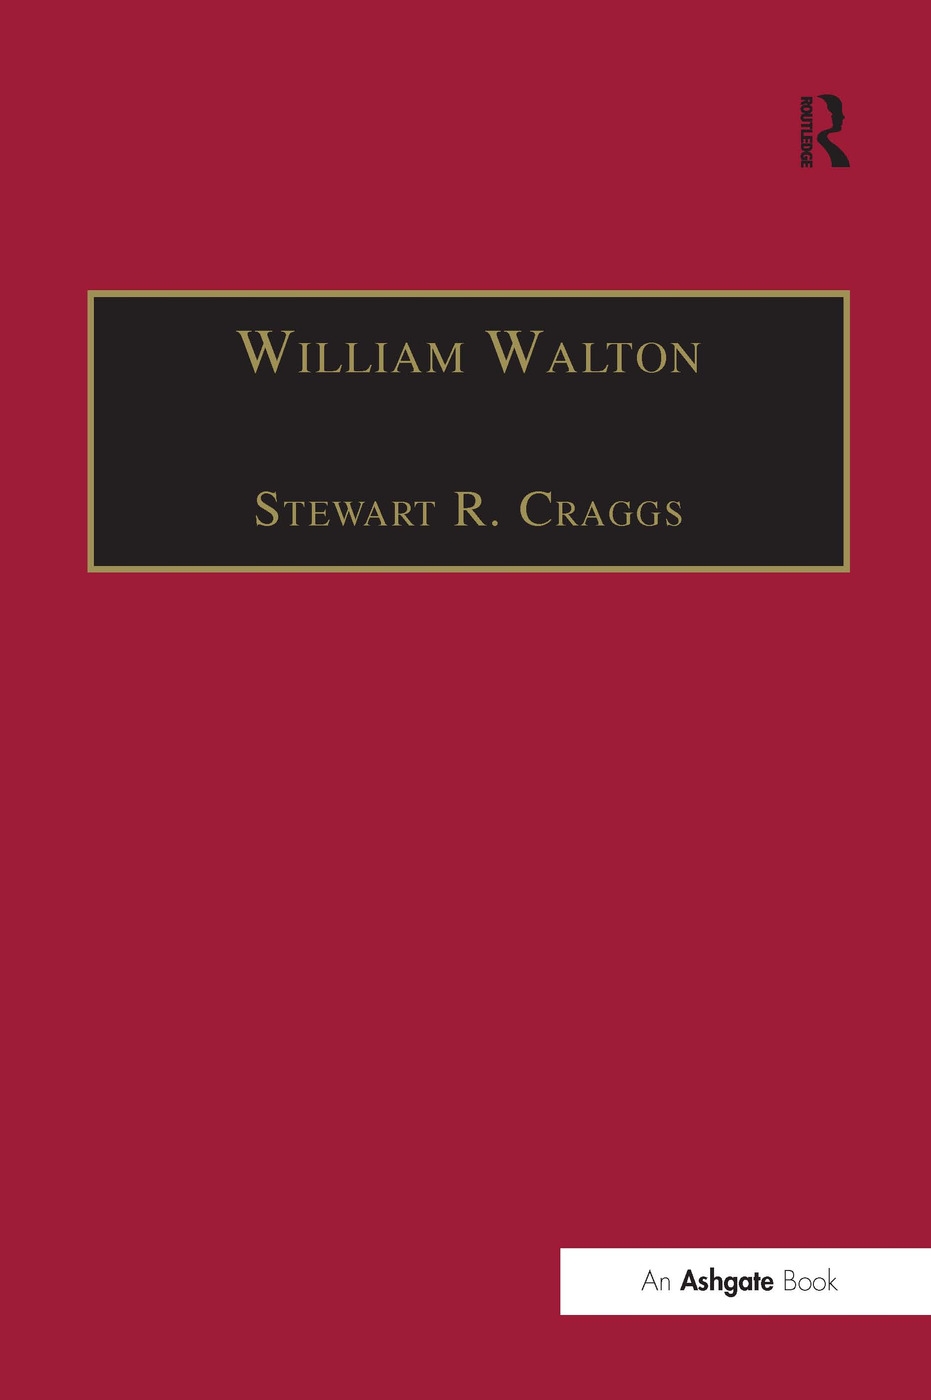 William Walton: Music and Literature